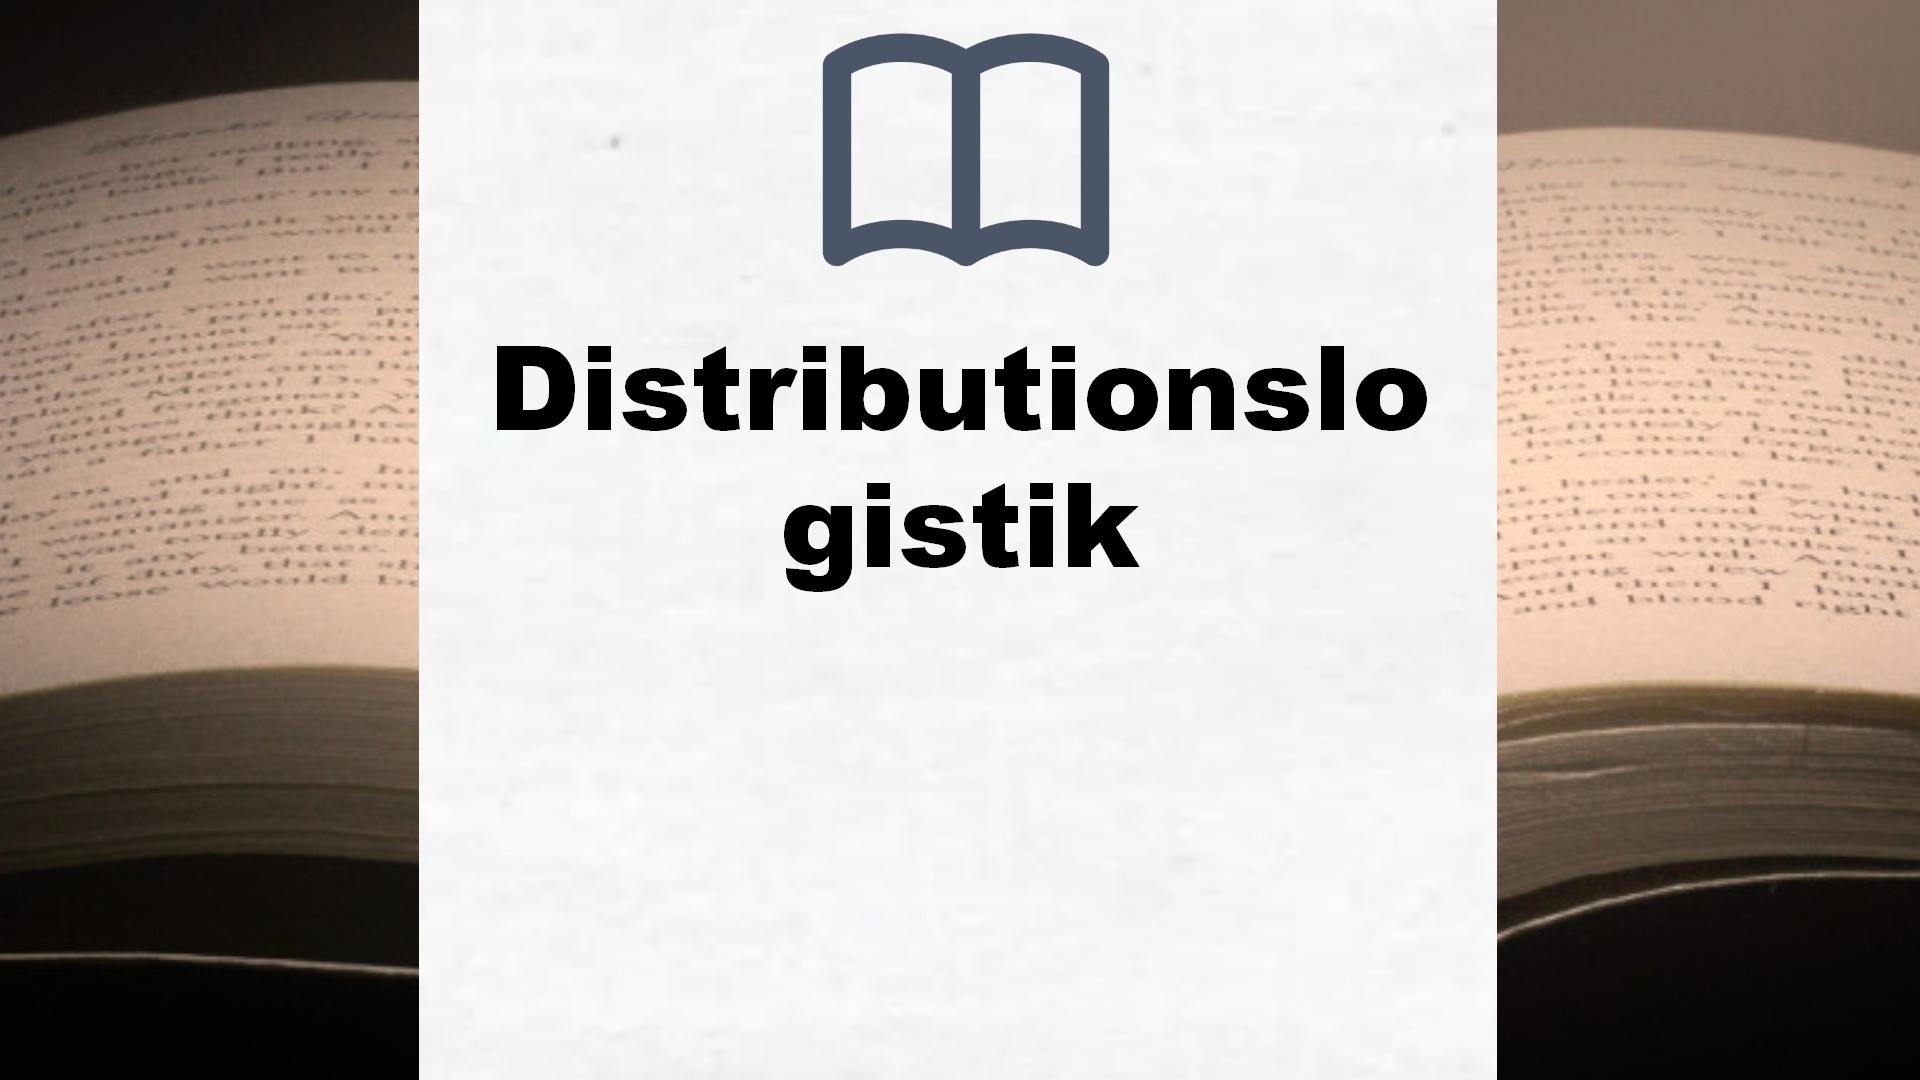 Bücher über Distributionslogistik